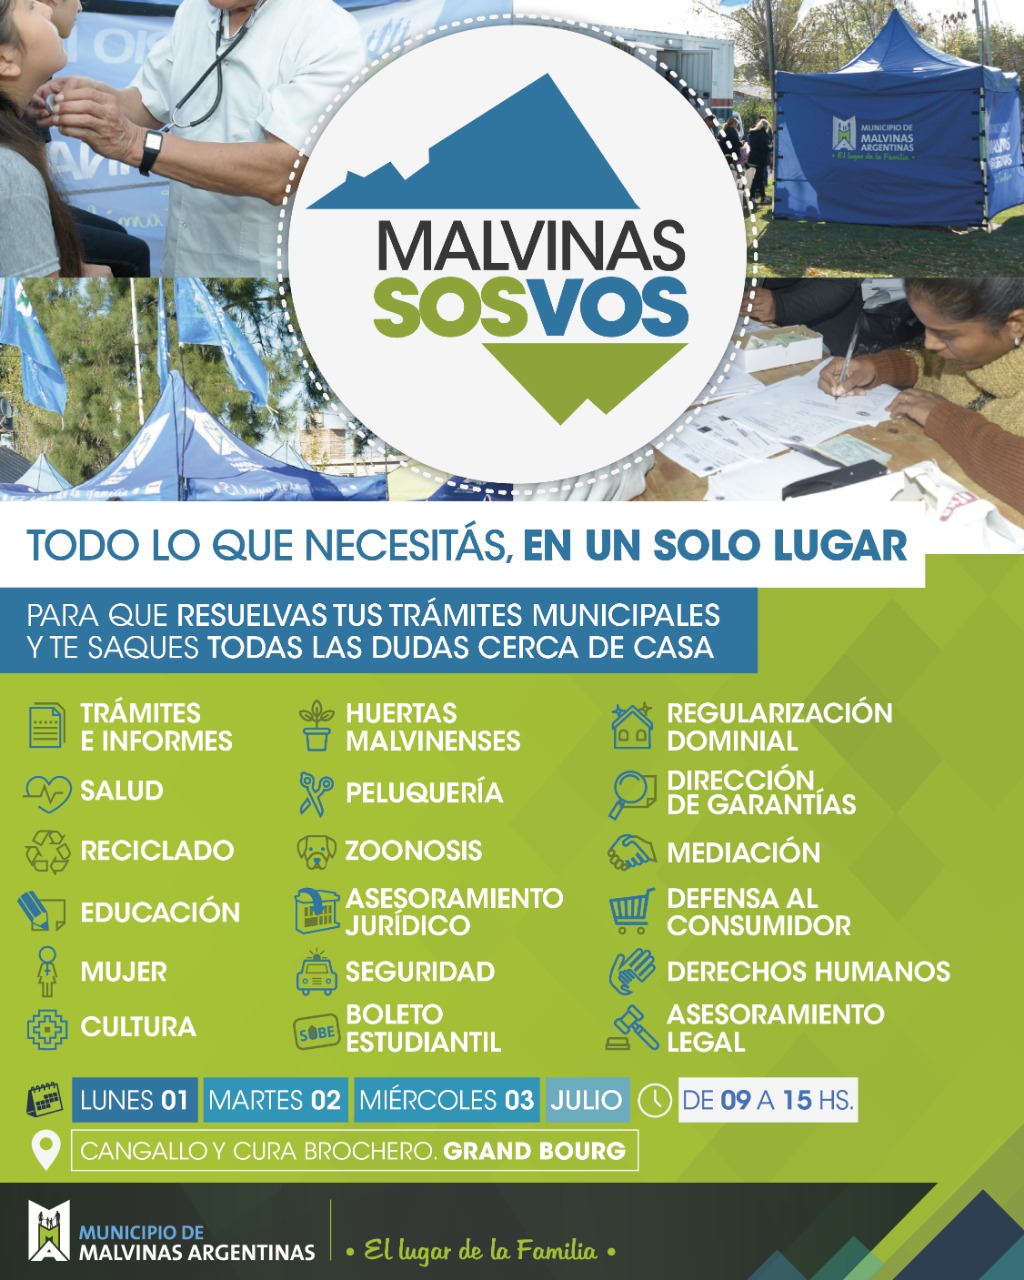 Malvinas Argentinas: operativo “Malvinas sos vos”. Malvin11